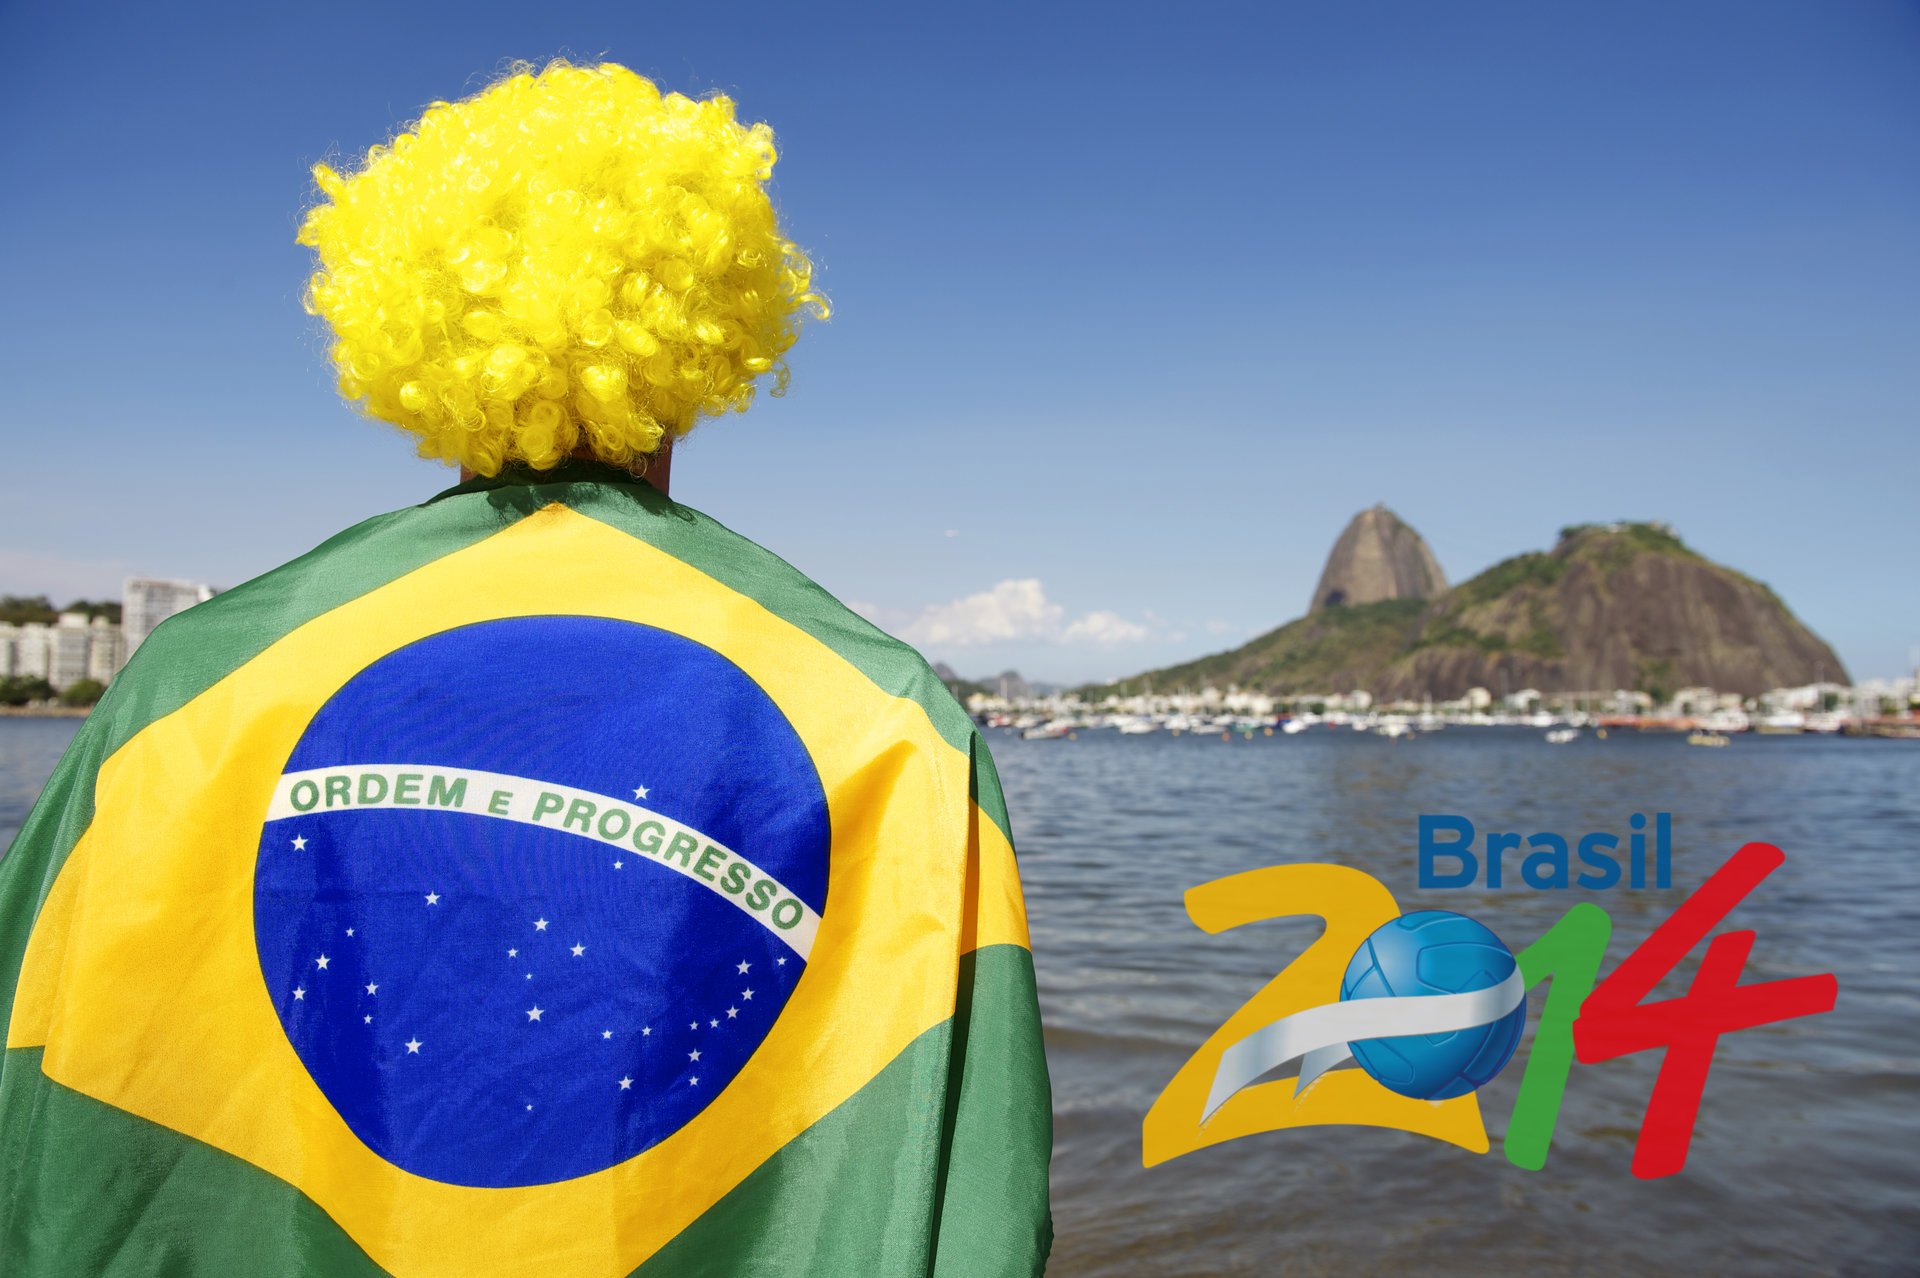 бразилия fifa кубок мира 2014 футбол флаг вентилятор логотип болельщик